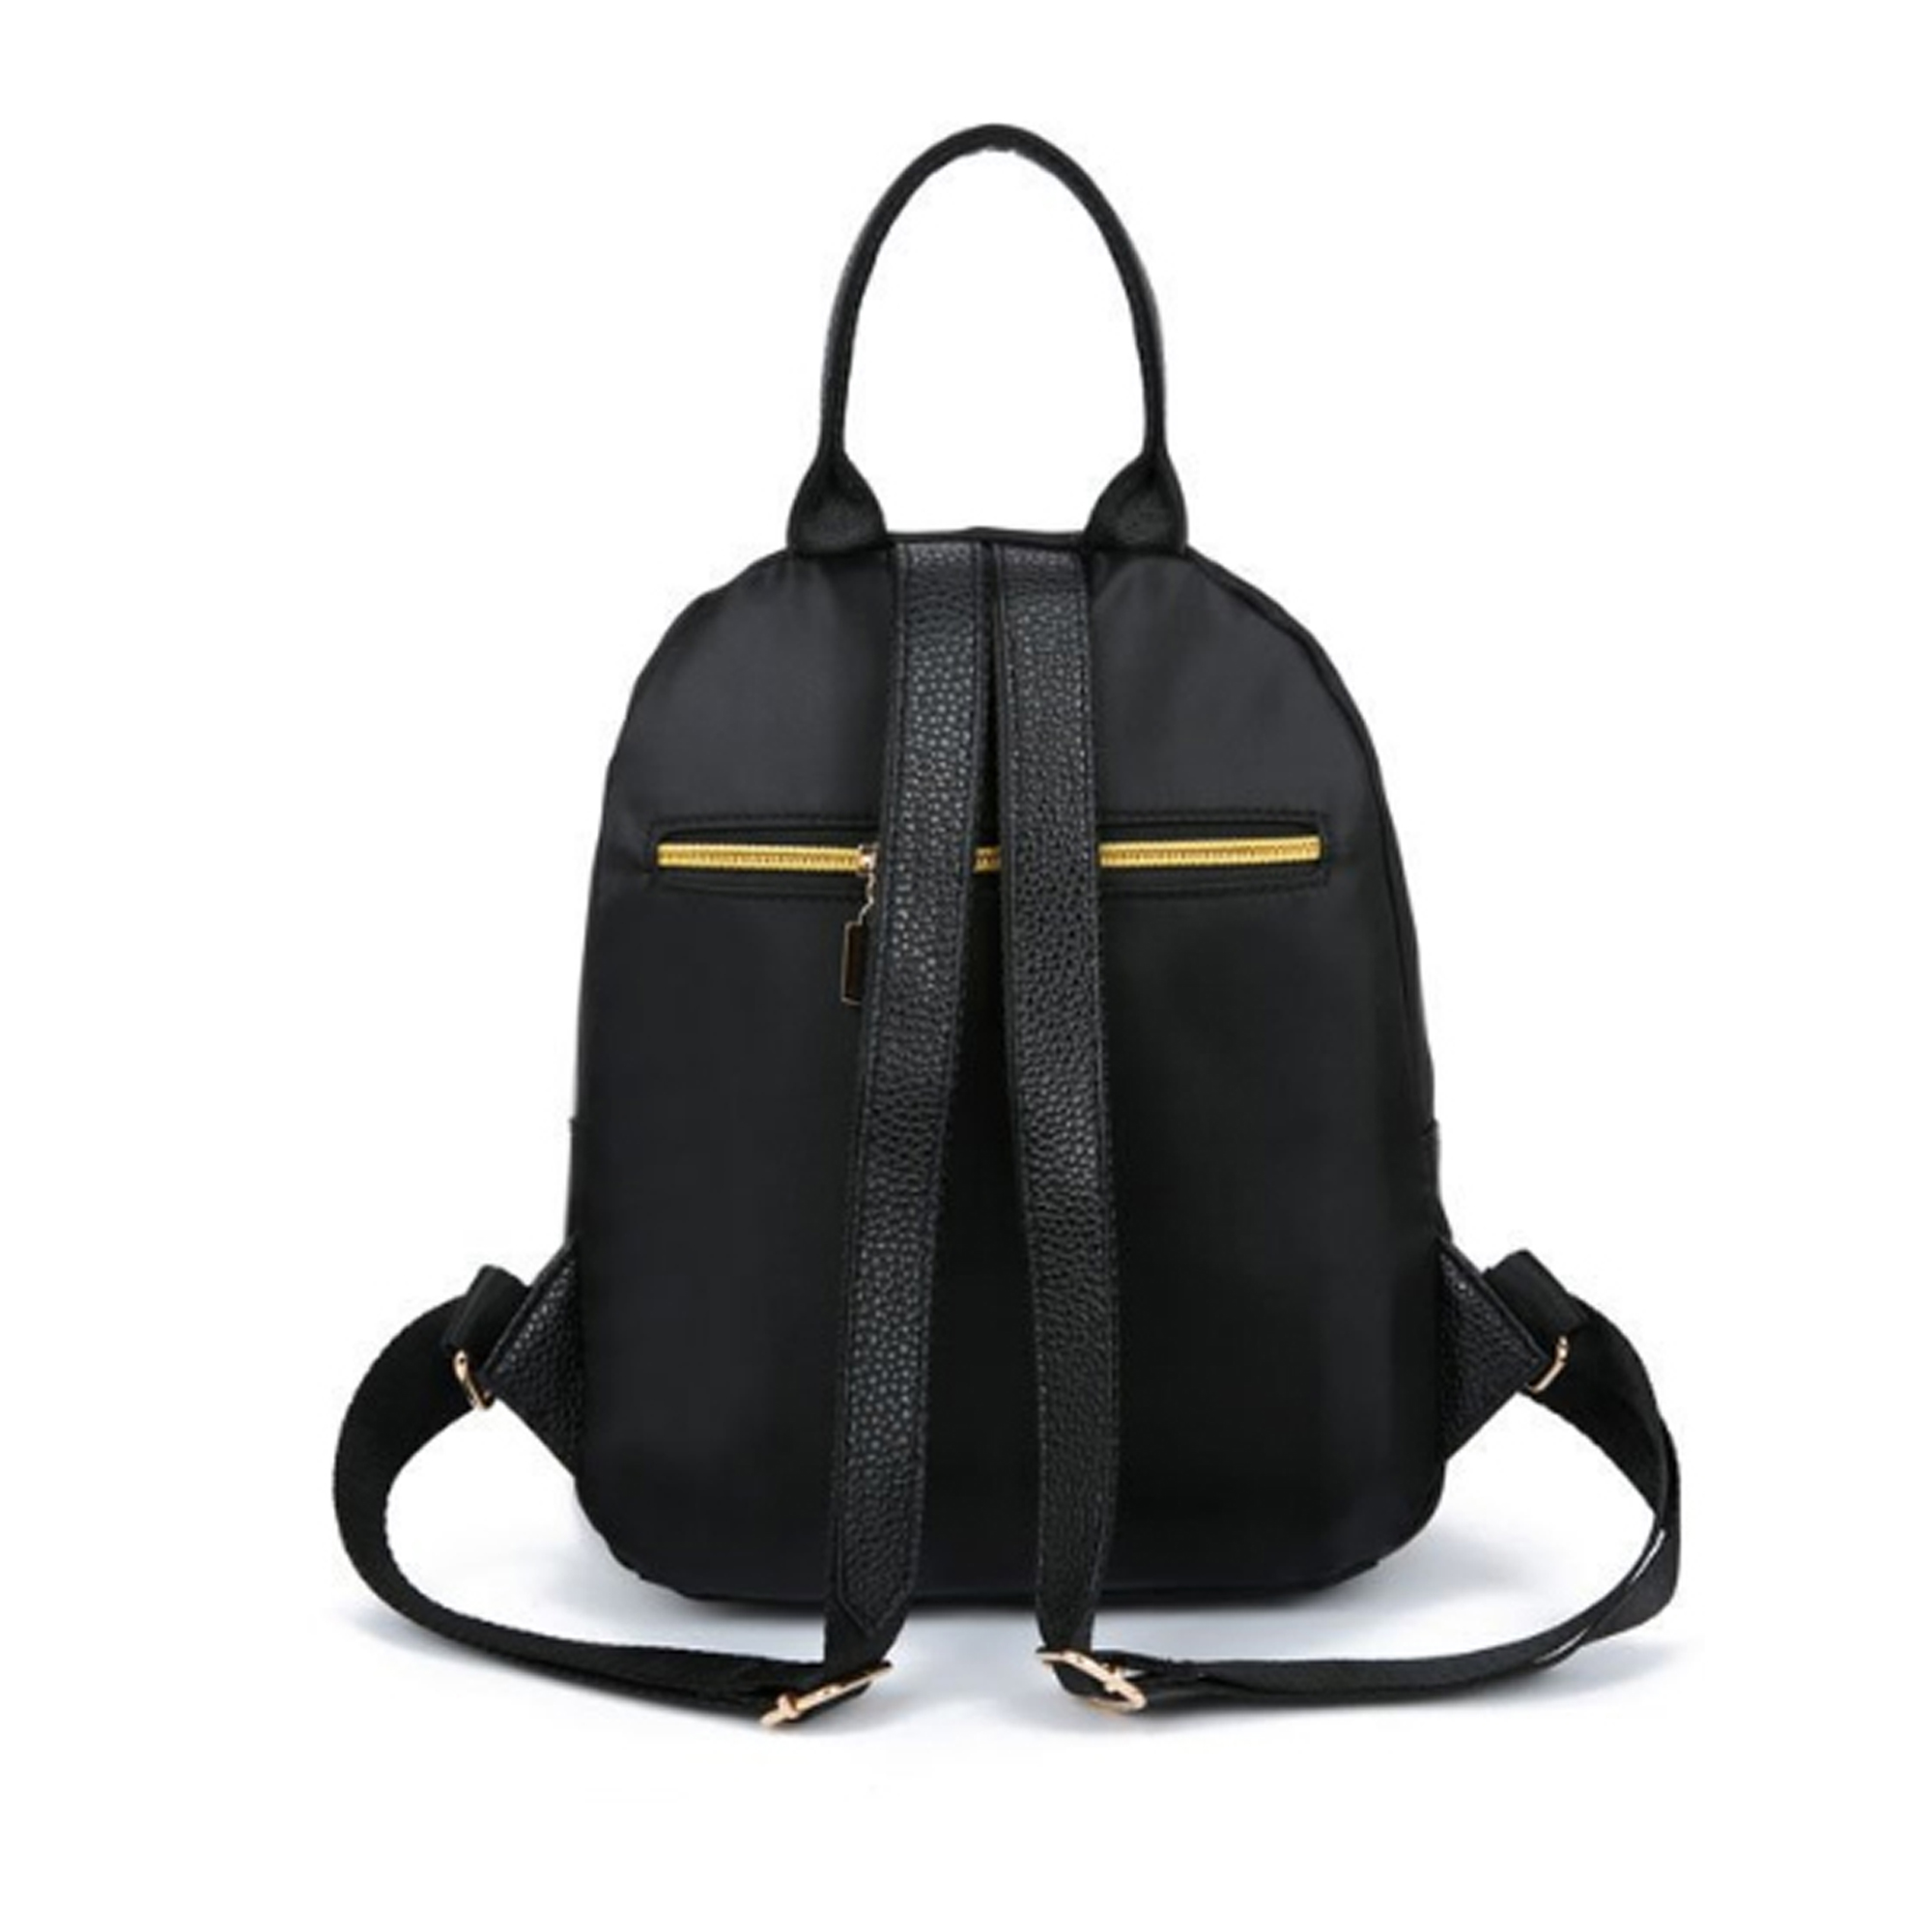 Hirigin Women Girls Black Nylon Mini Backpack Travel School Backpack Shoulder Bags - image 2 of 6